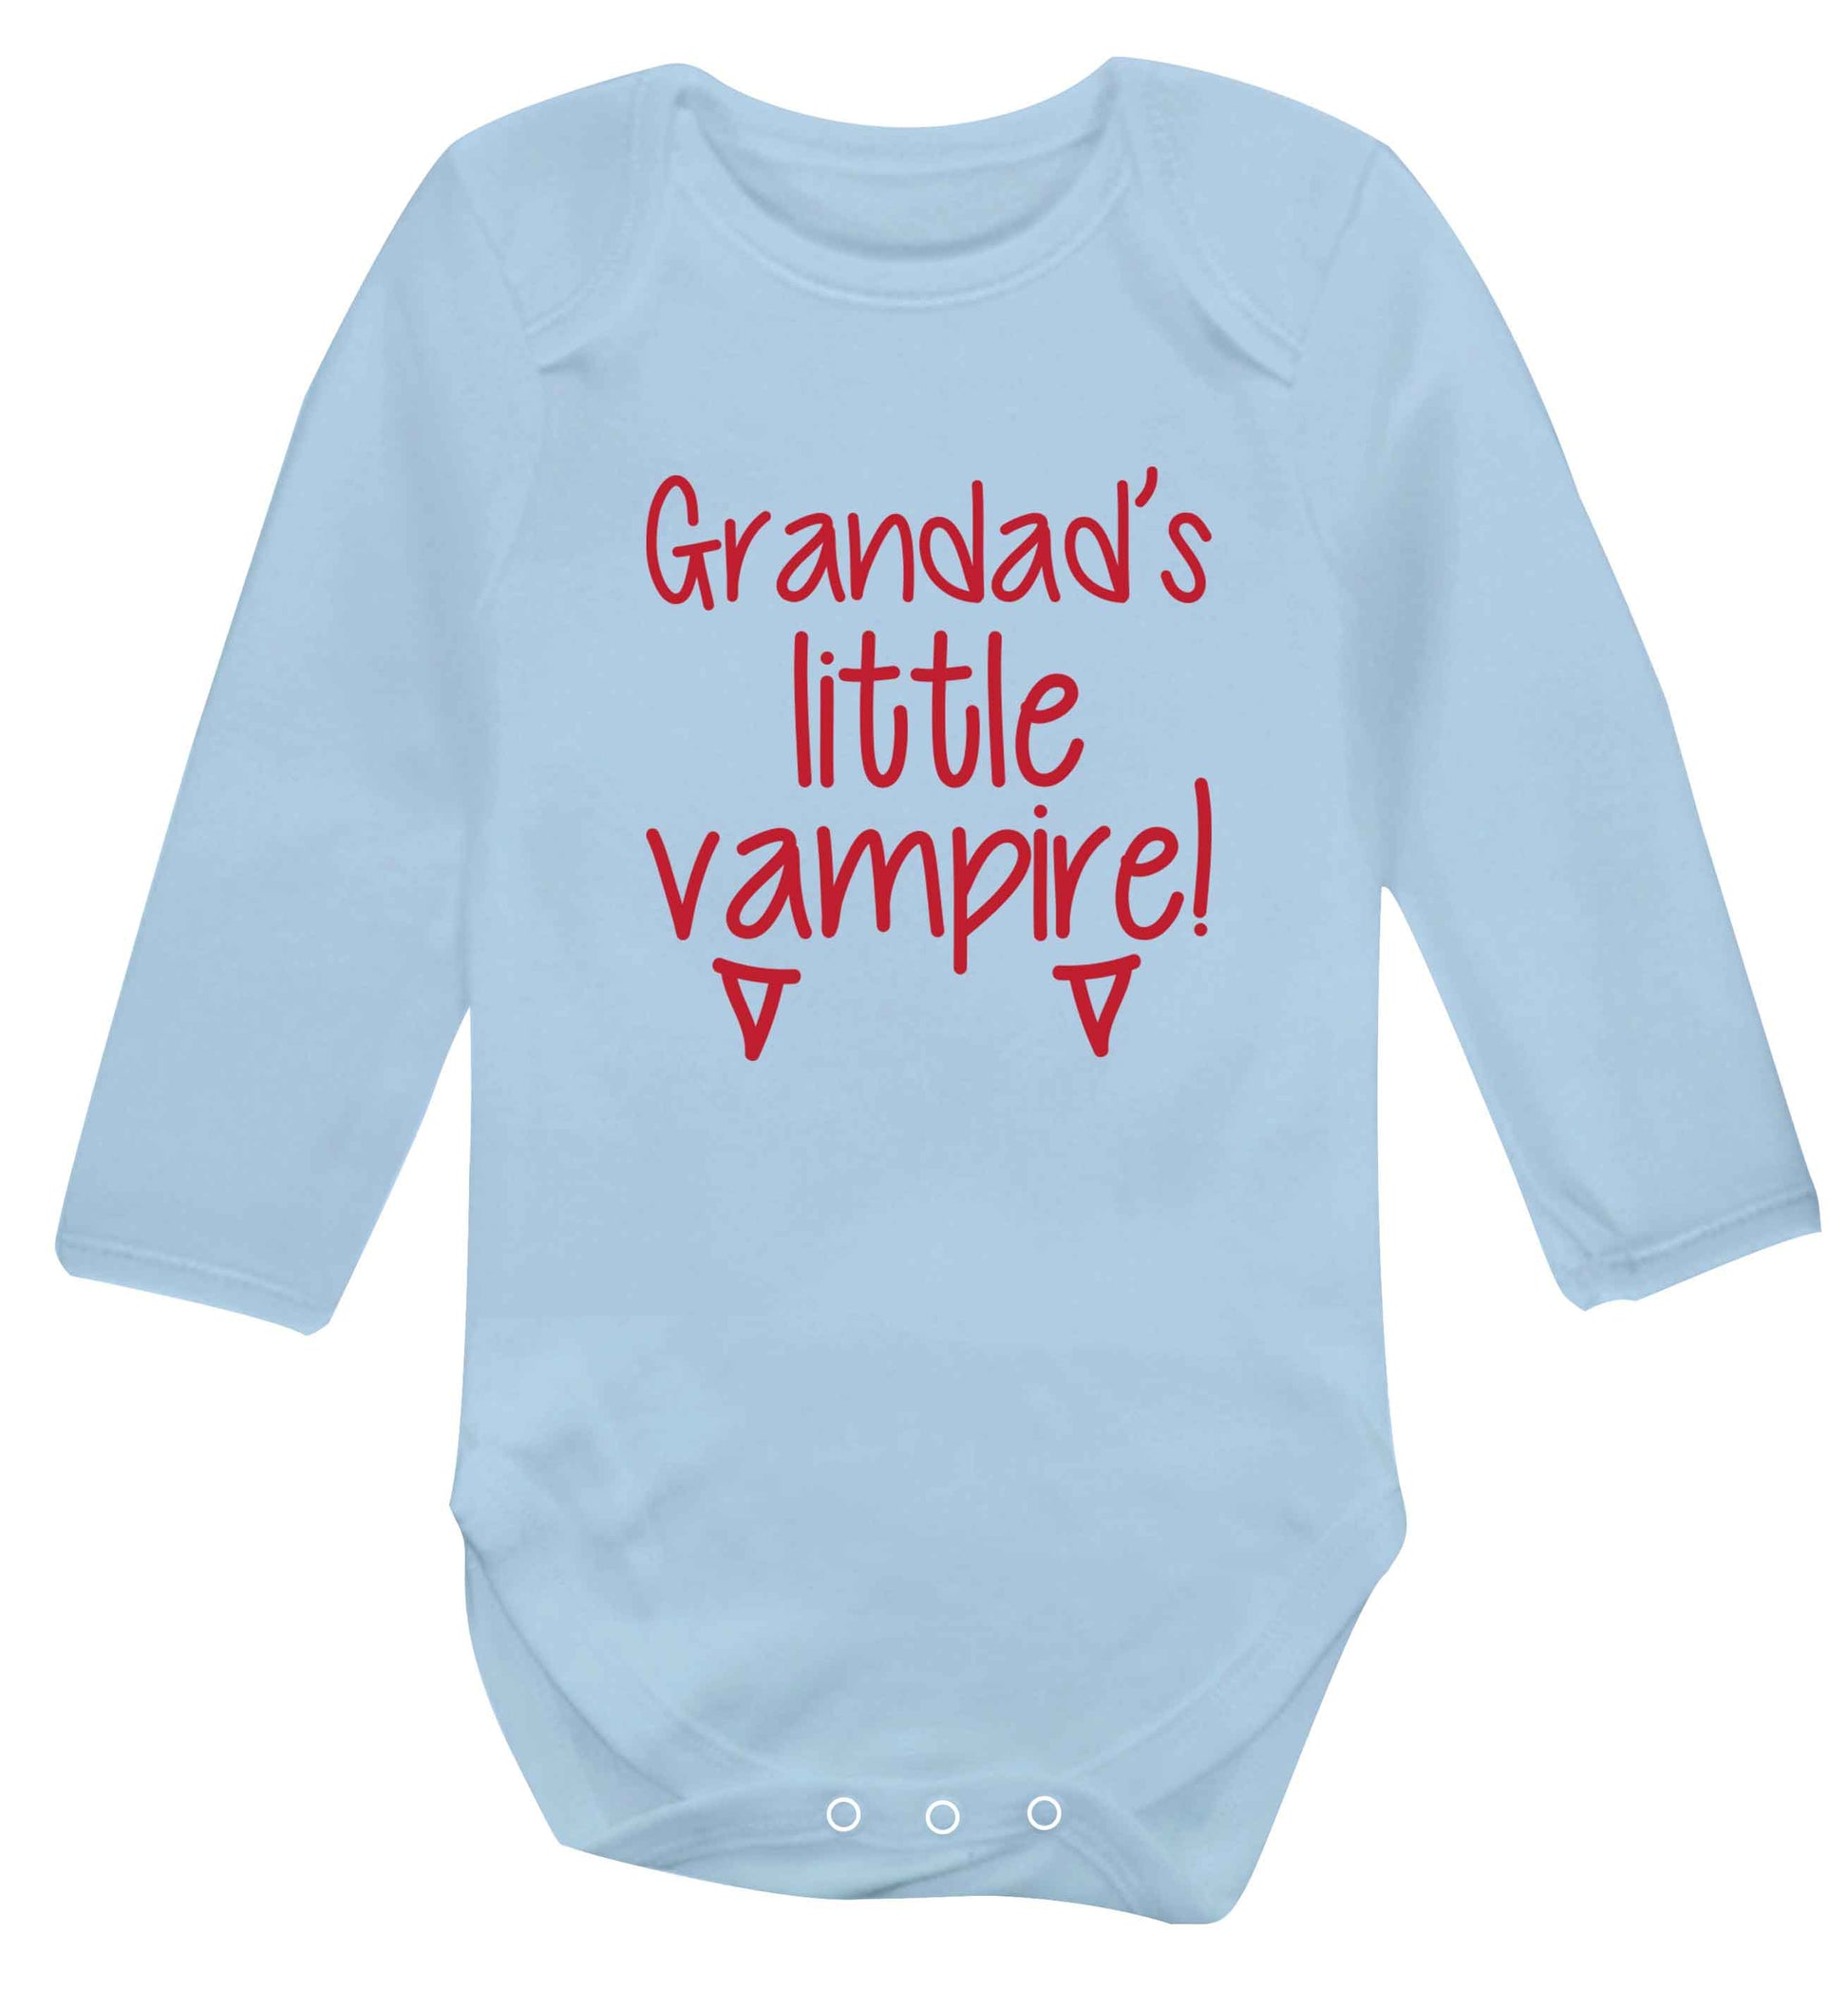 Grandad's little vampire baby vest long sleeved pale blue 6-12 months